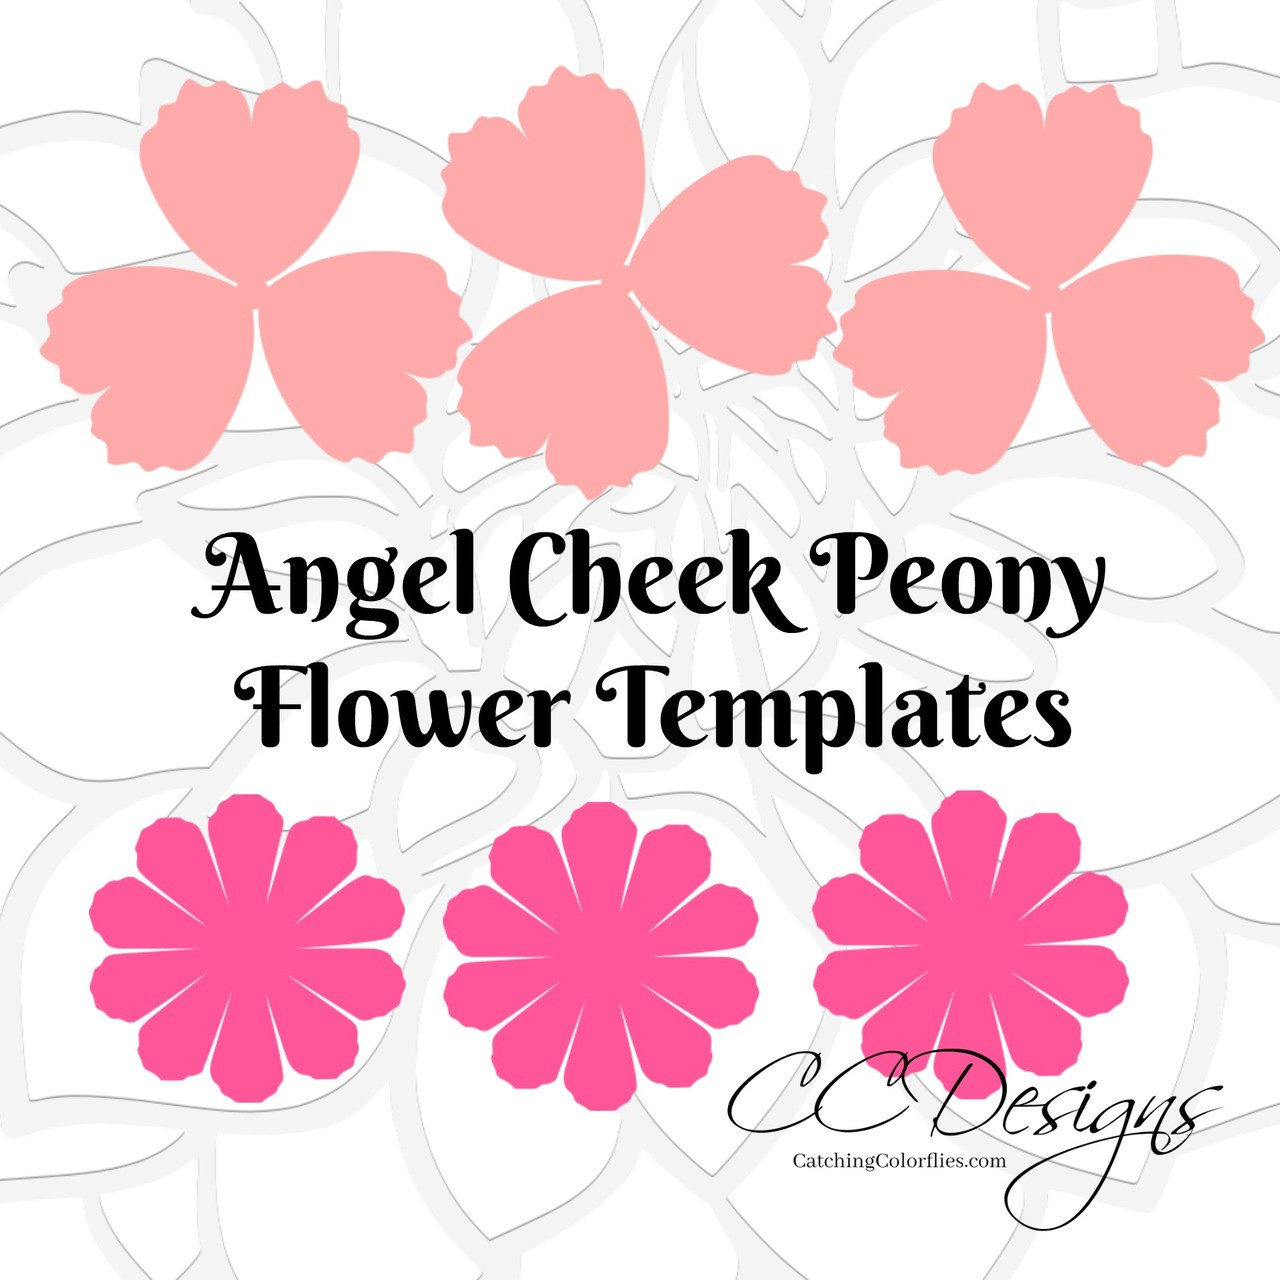 Download Angel Cheek Peony Paper Flower Template - Catching Colorflies